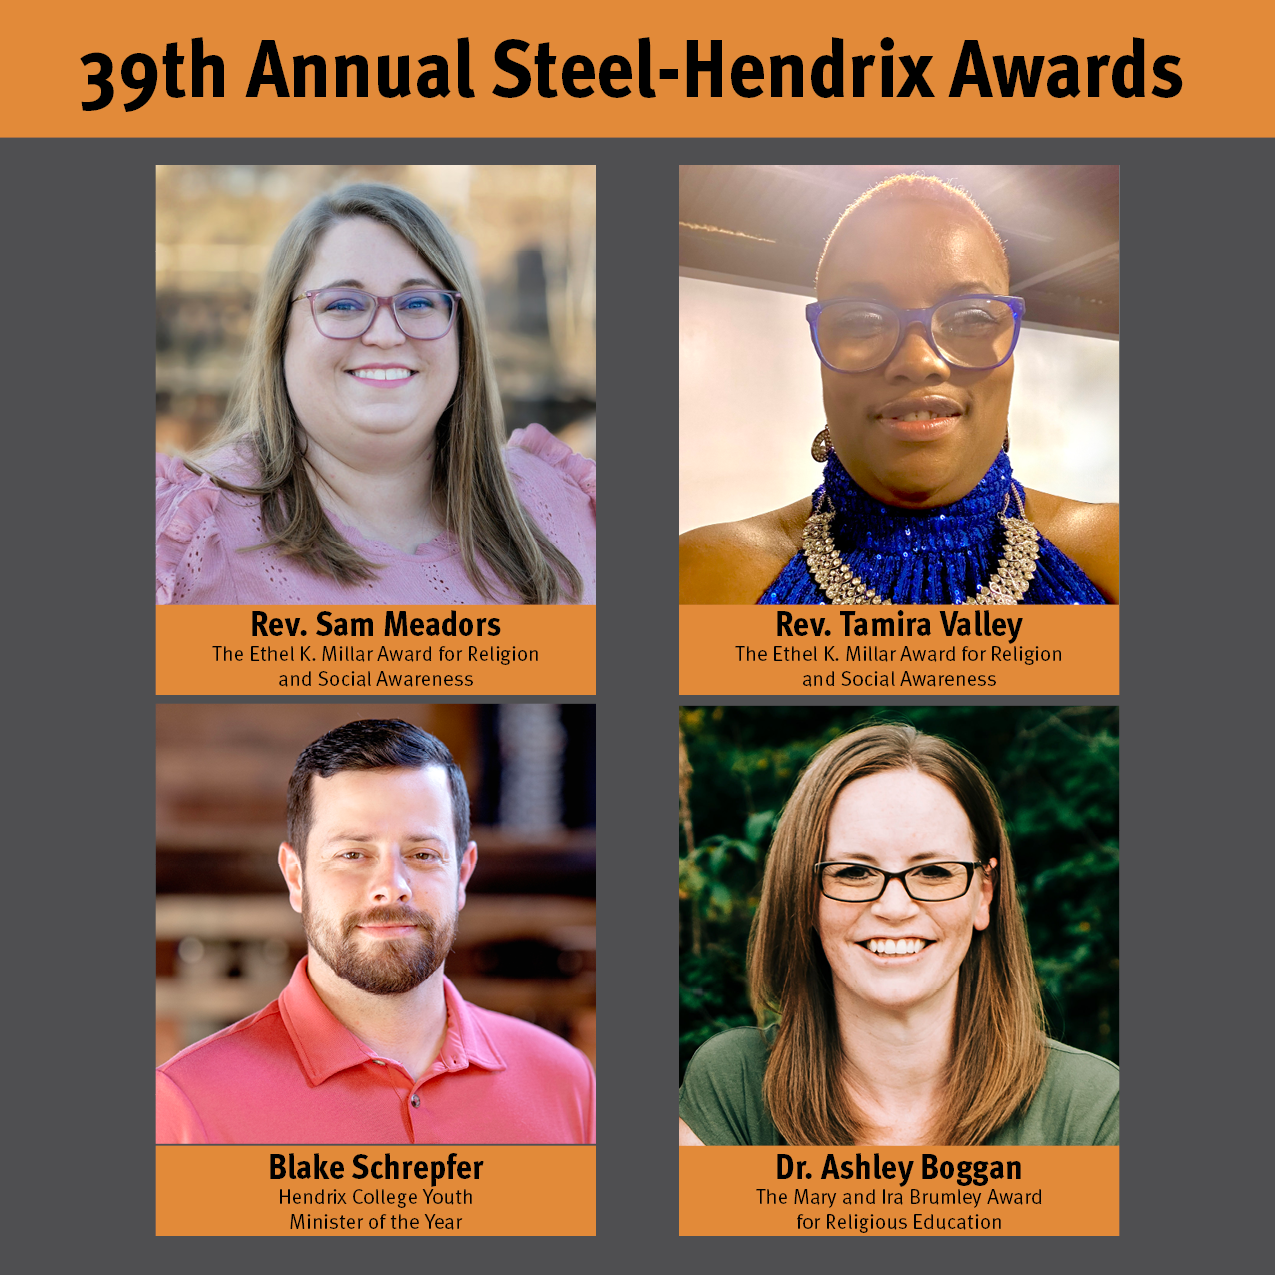 Recipients of the 39th Annual Steel-Hendrix Awards, clockwise from upper left: Rev. Sam Meadors, Rev. Tamira Valley, Dr. Ashley Boggan, Blake Schrepfer. Tamira Valley, Dr. Ashley Boggan, Blake Schrepfer